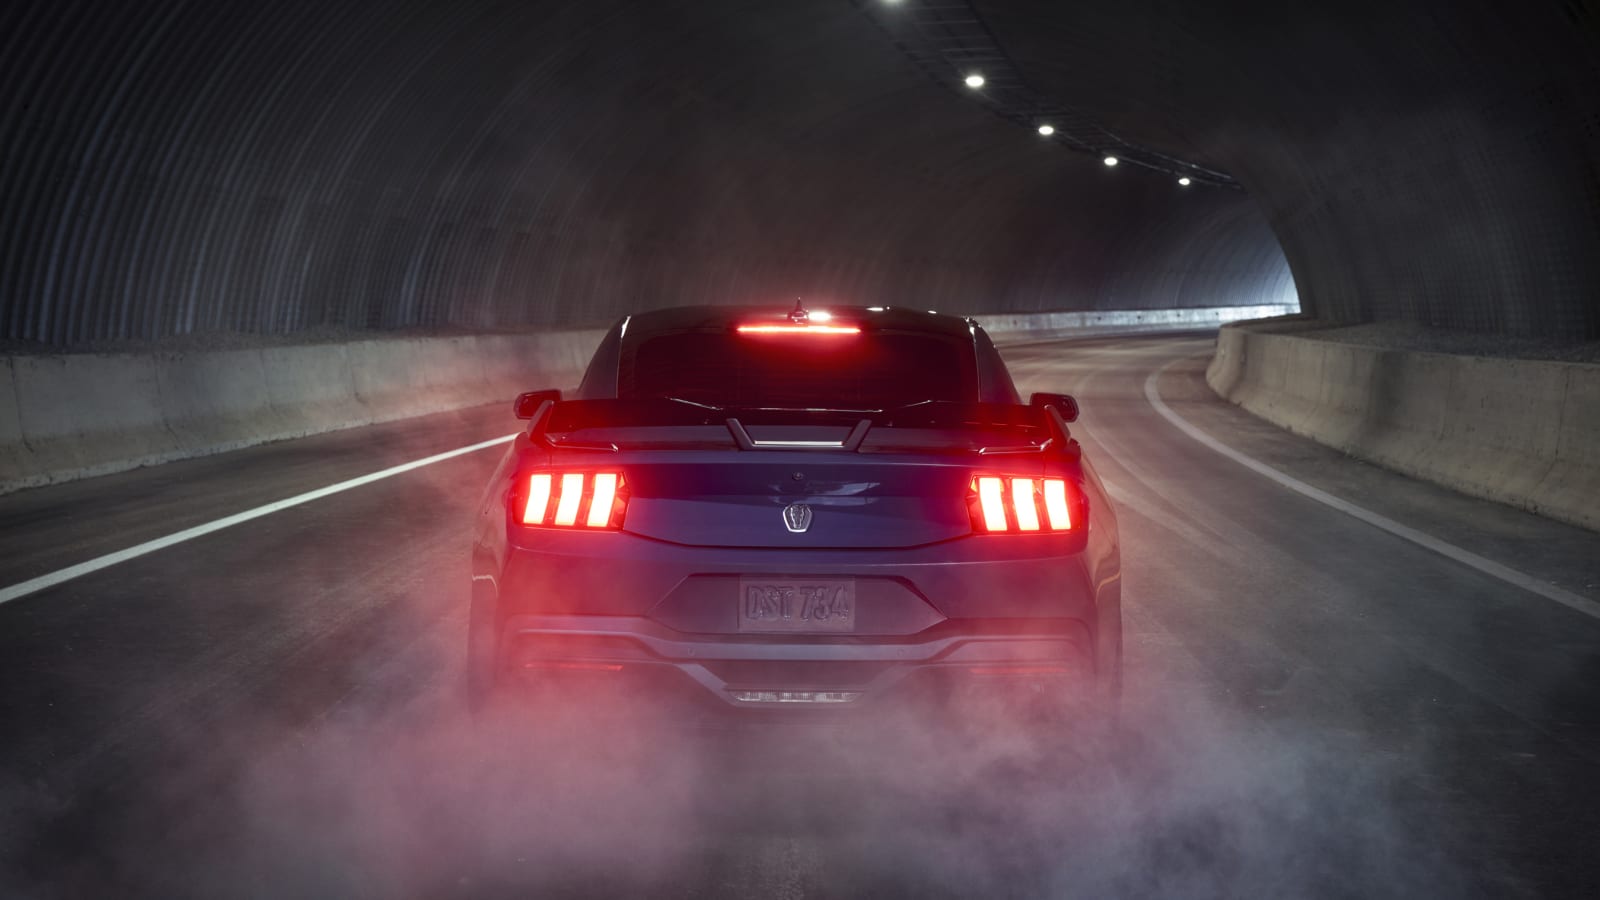 Dark Horse is the new range-topping, 500+ horsepower Ford Mustang